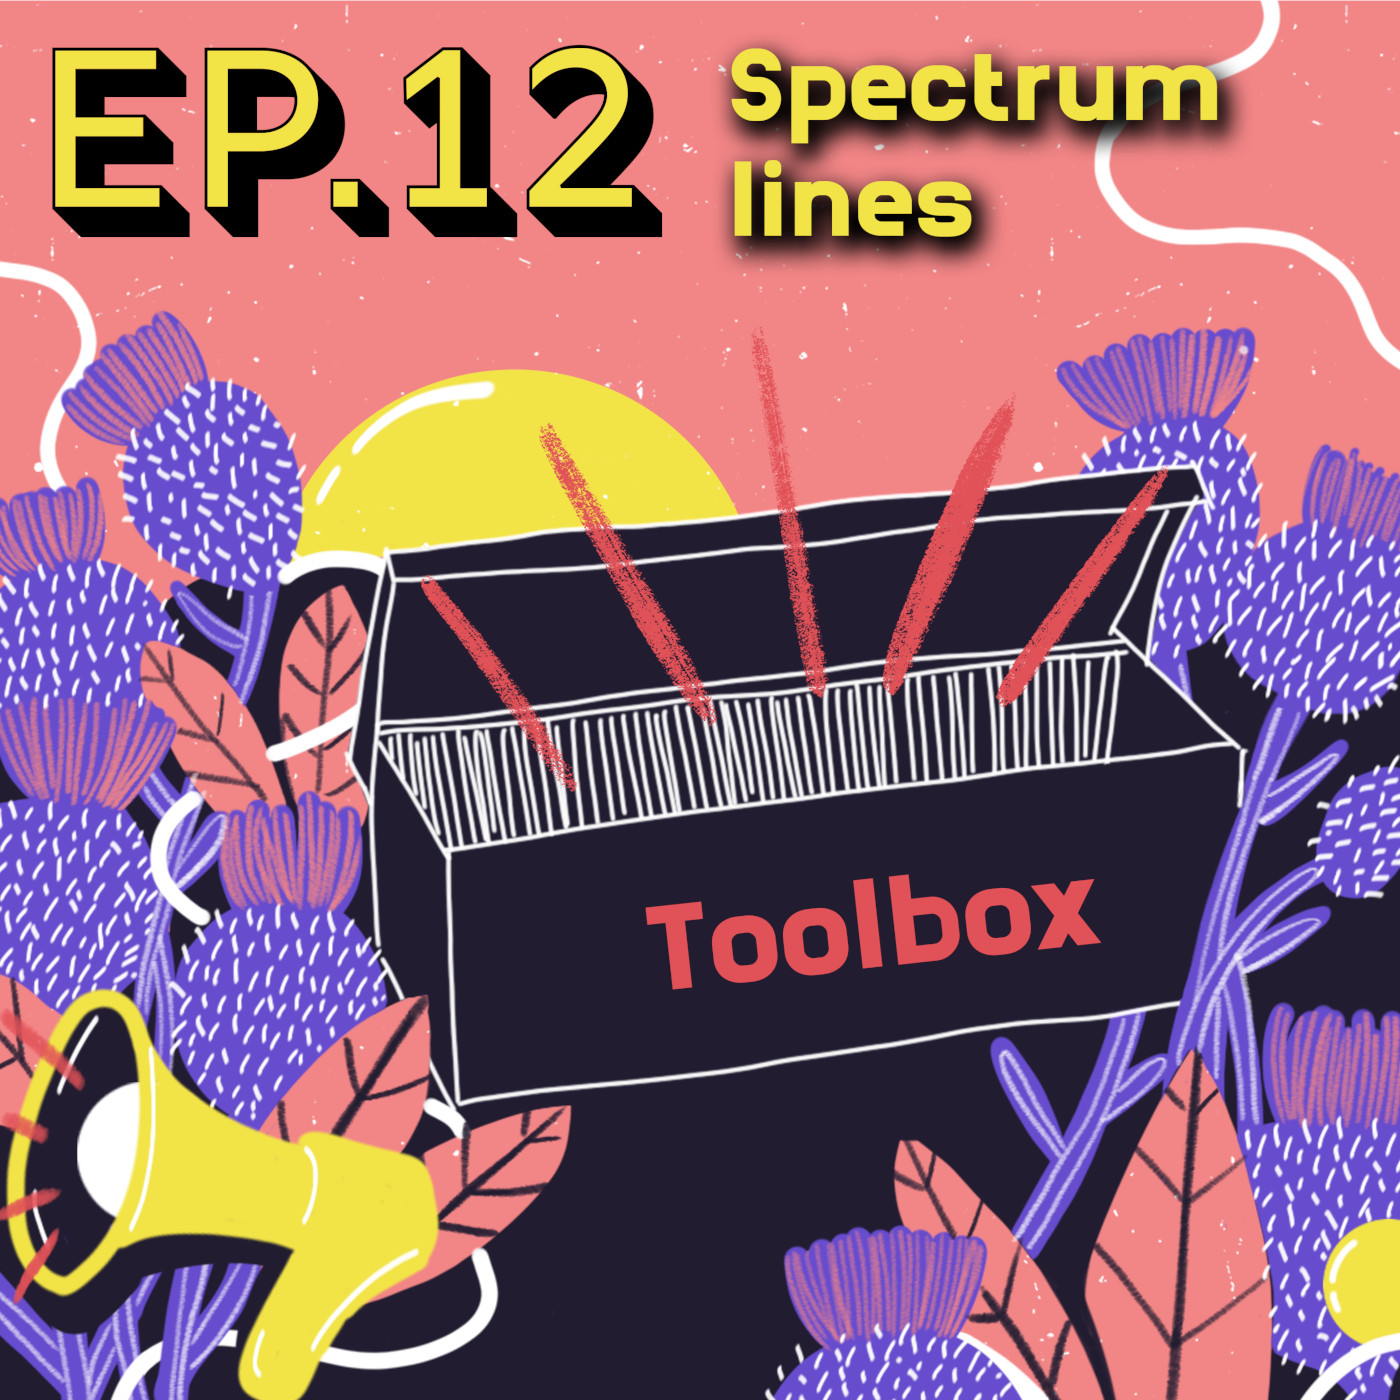 Toolbox: Spectrum lines